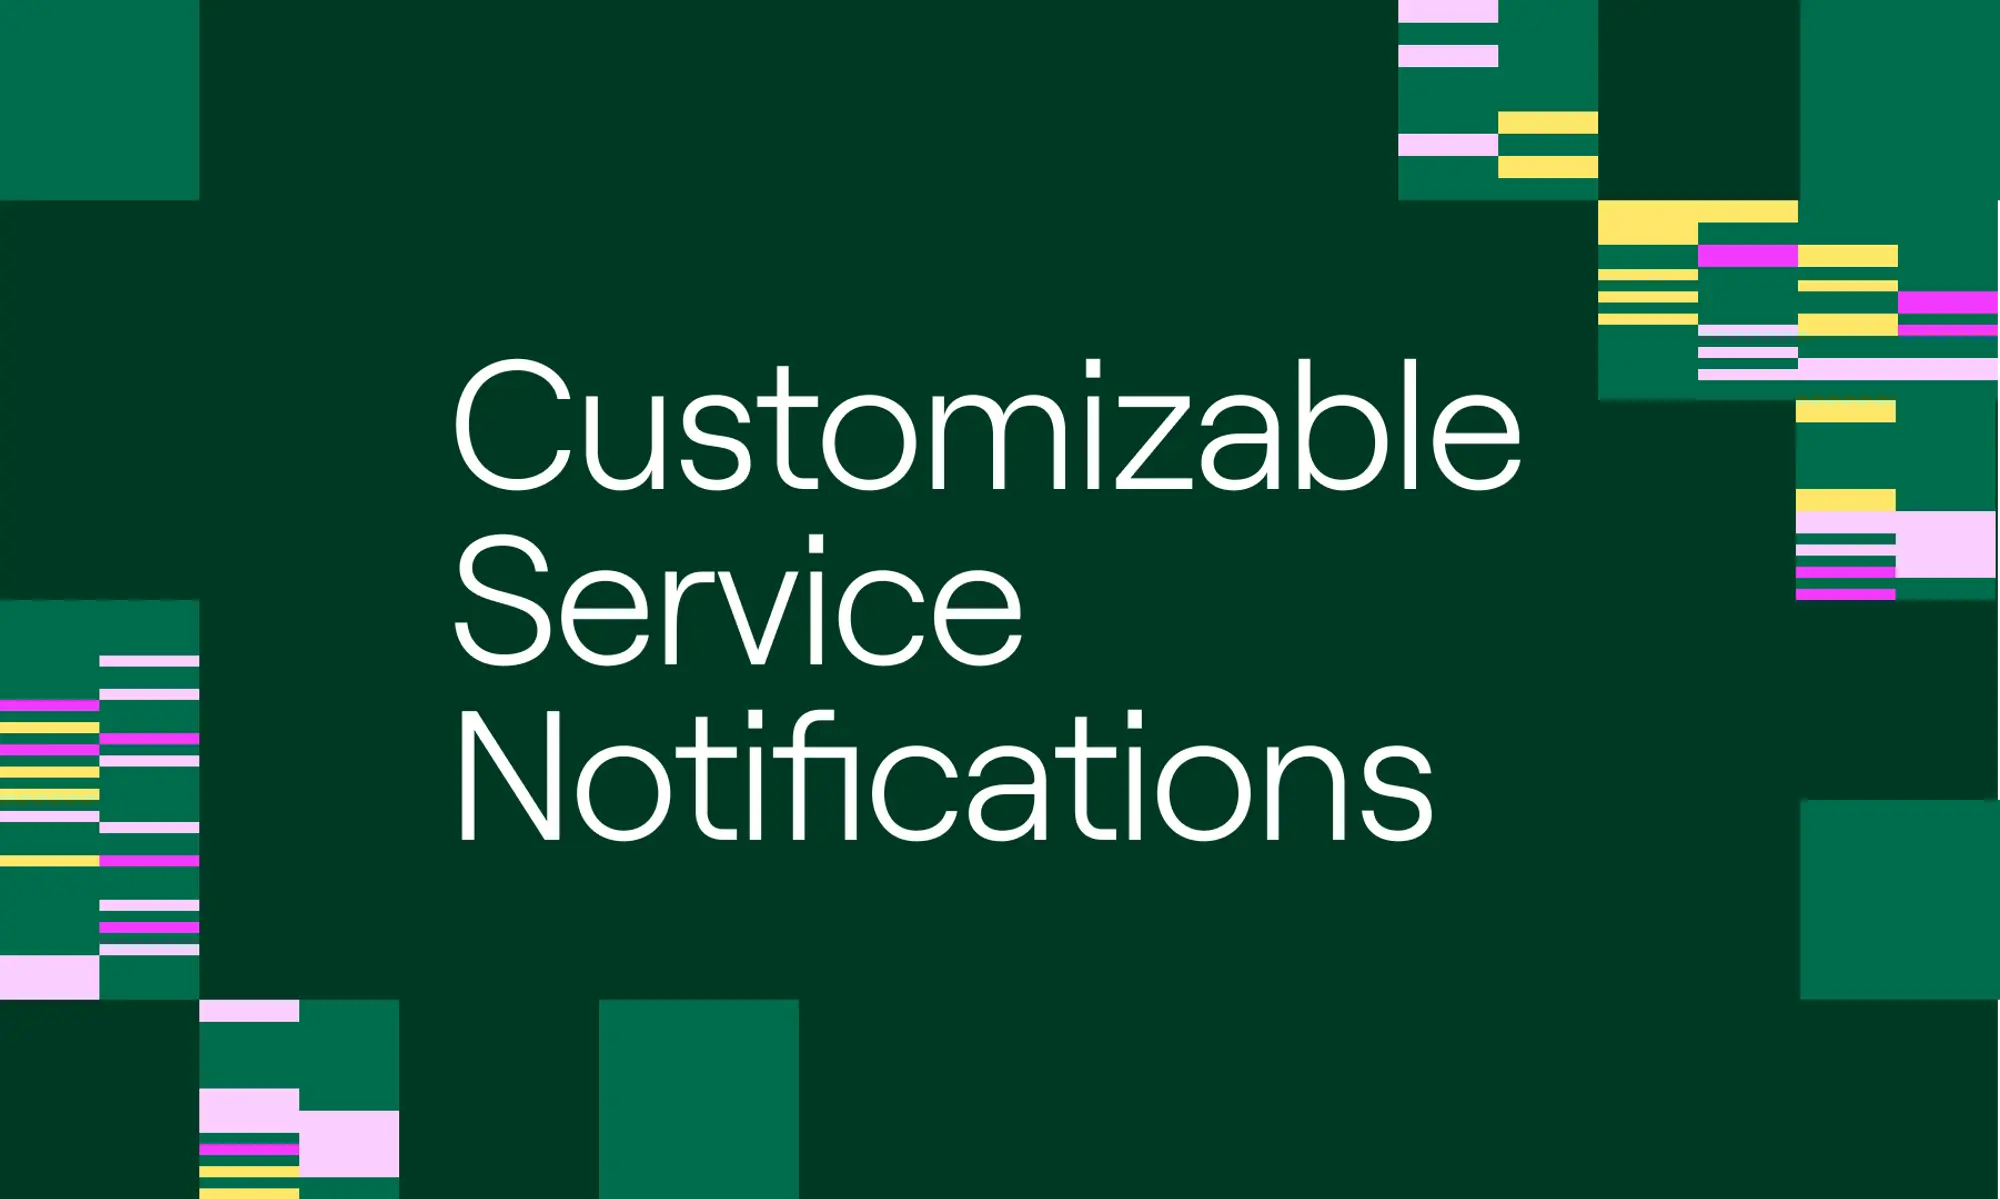 Customizable Service Notifications